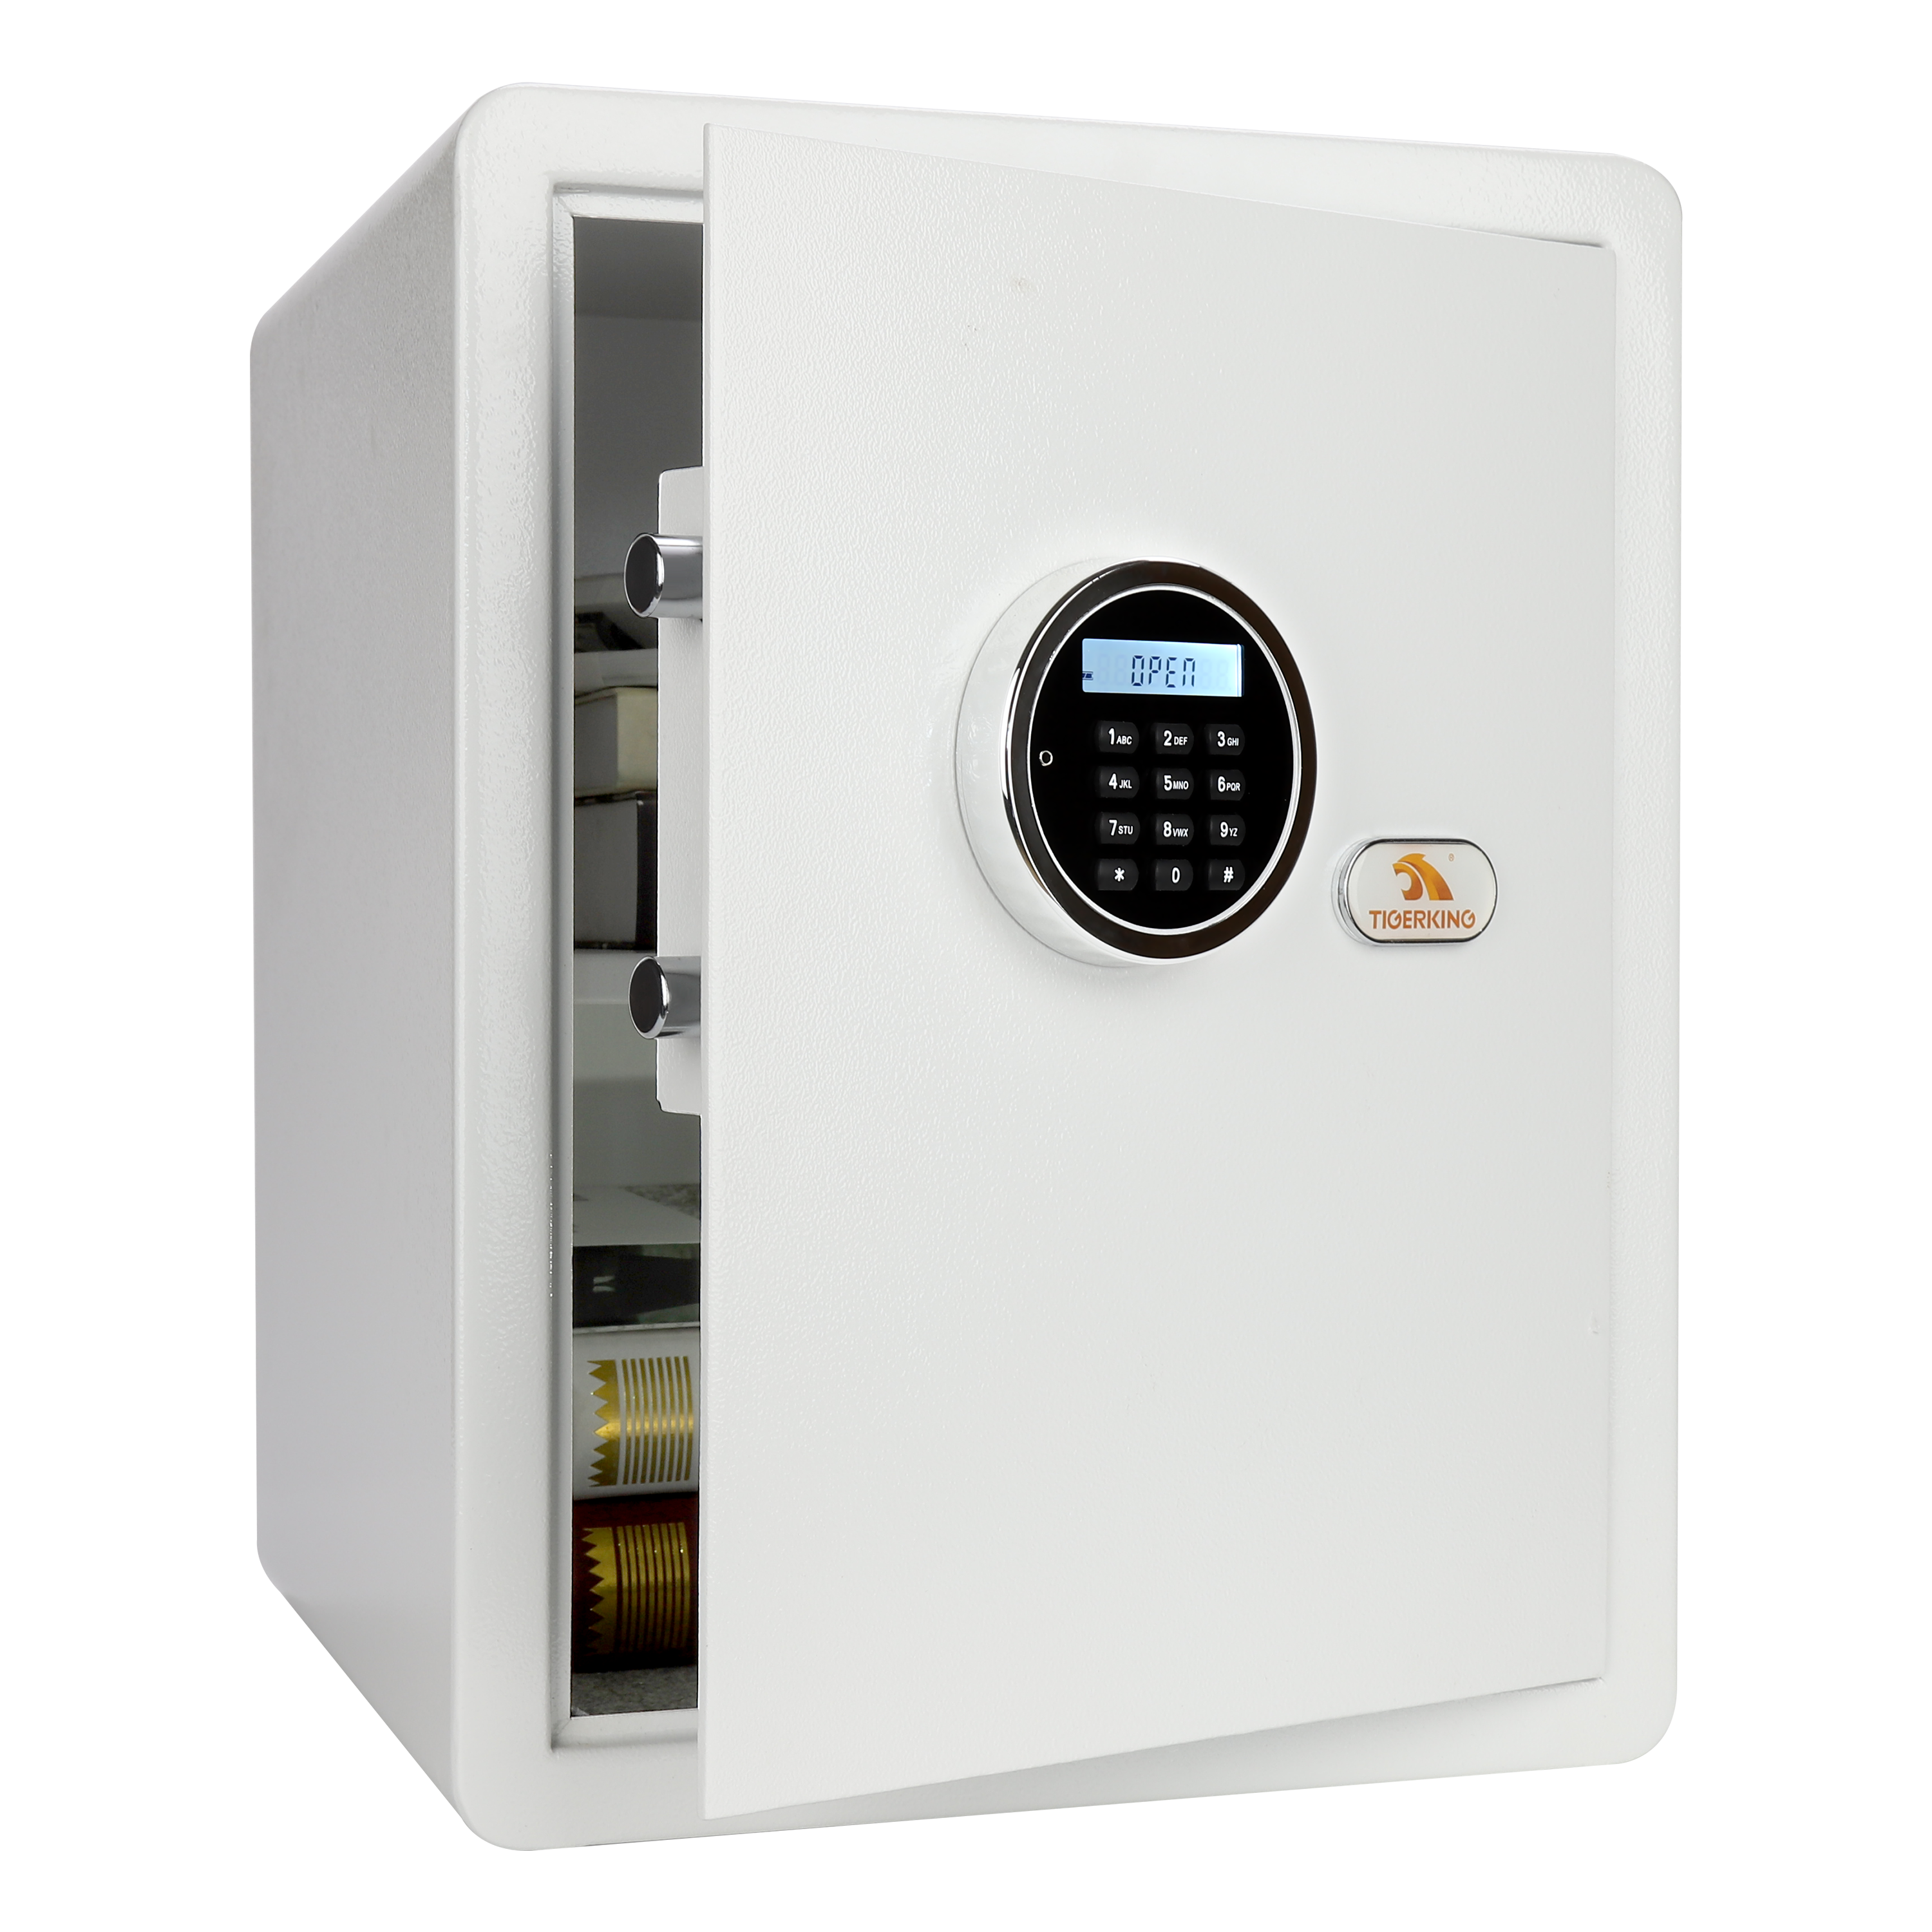 Security Home Safe 1.8 Cubit Feet White E45LK - TIGERKING TIGERKING SAFE